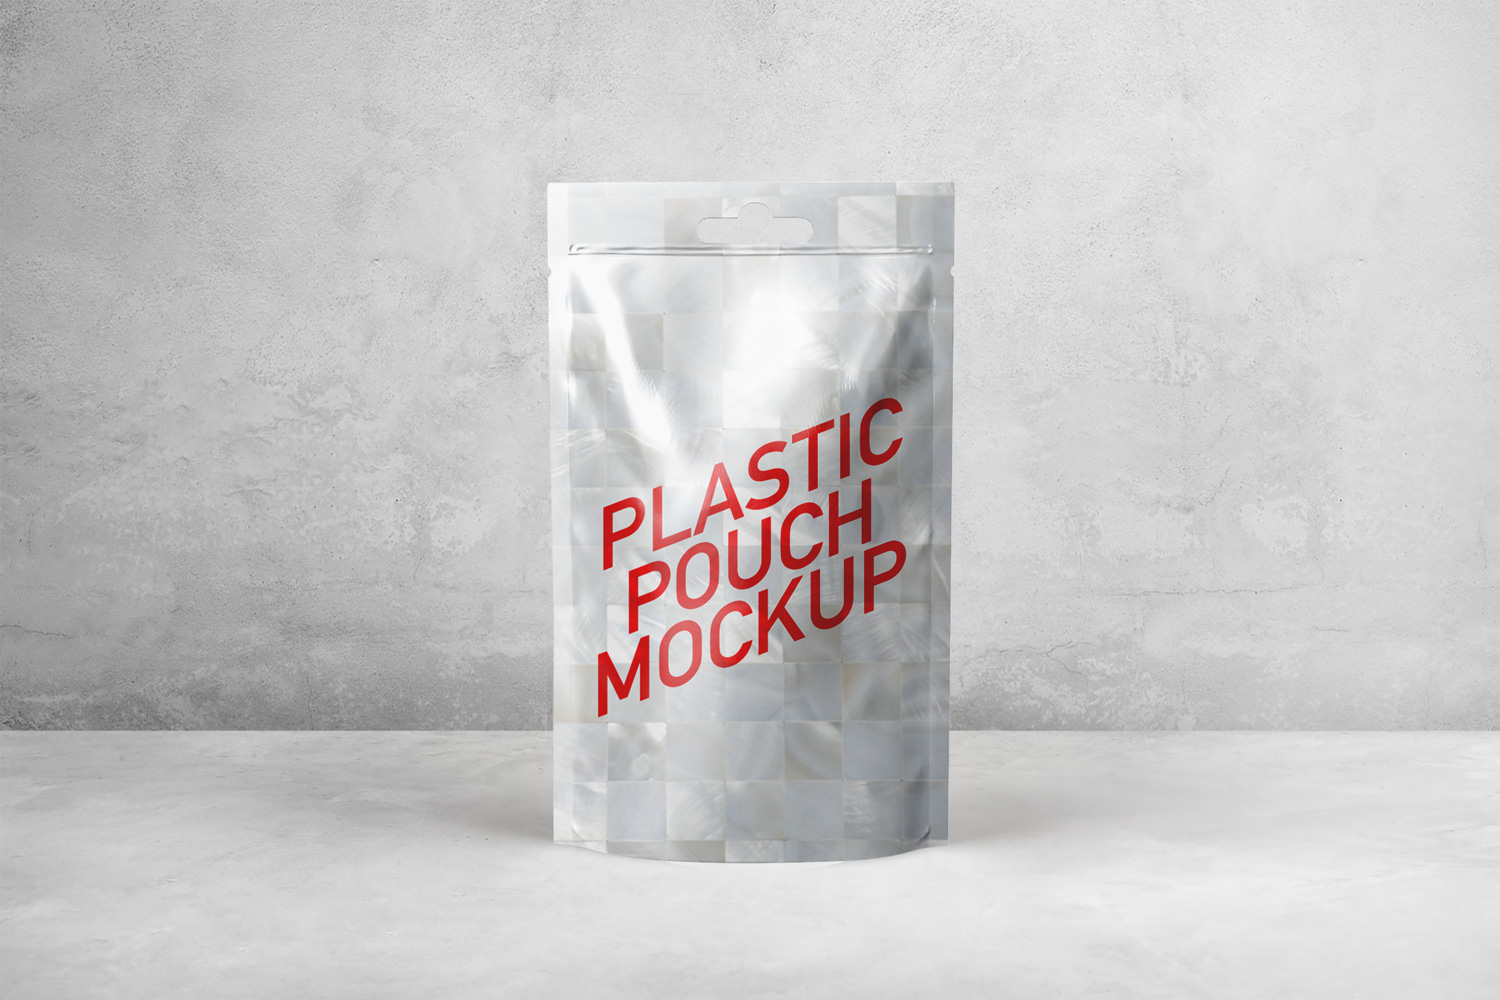 Plastic Pouch Mockup